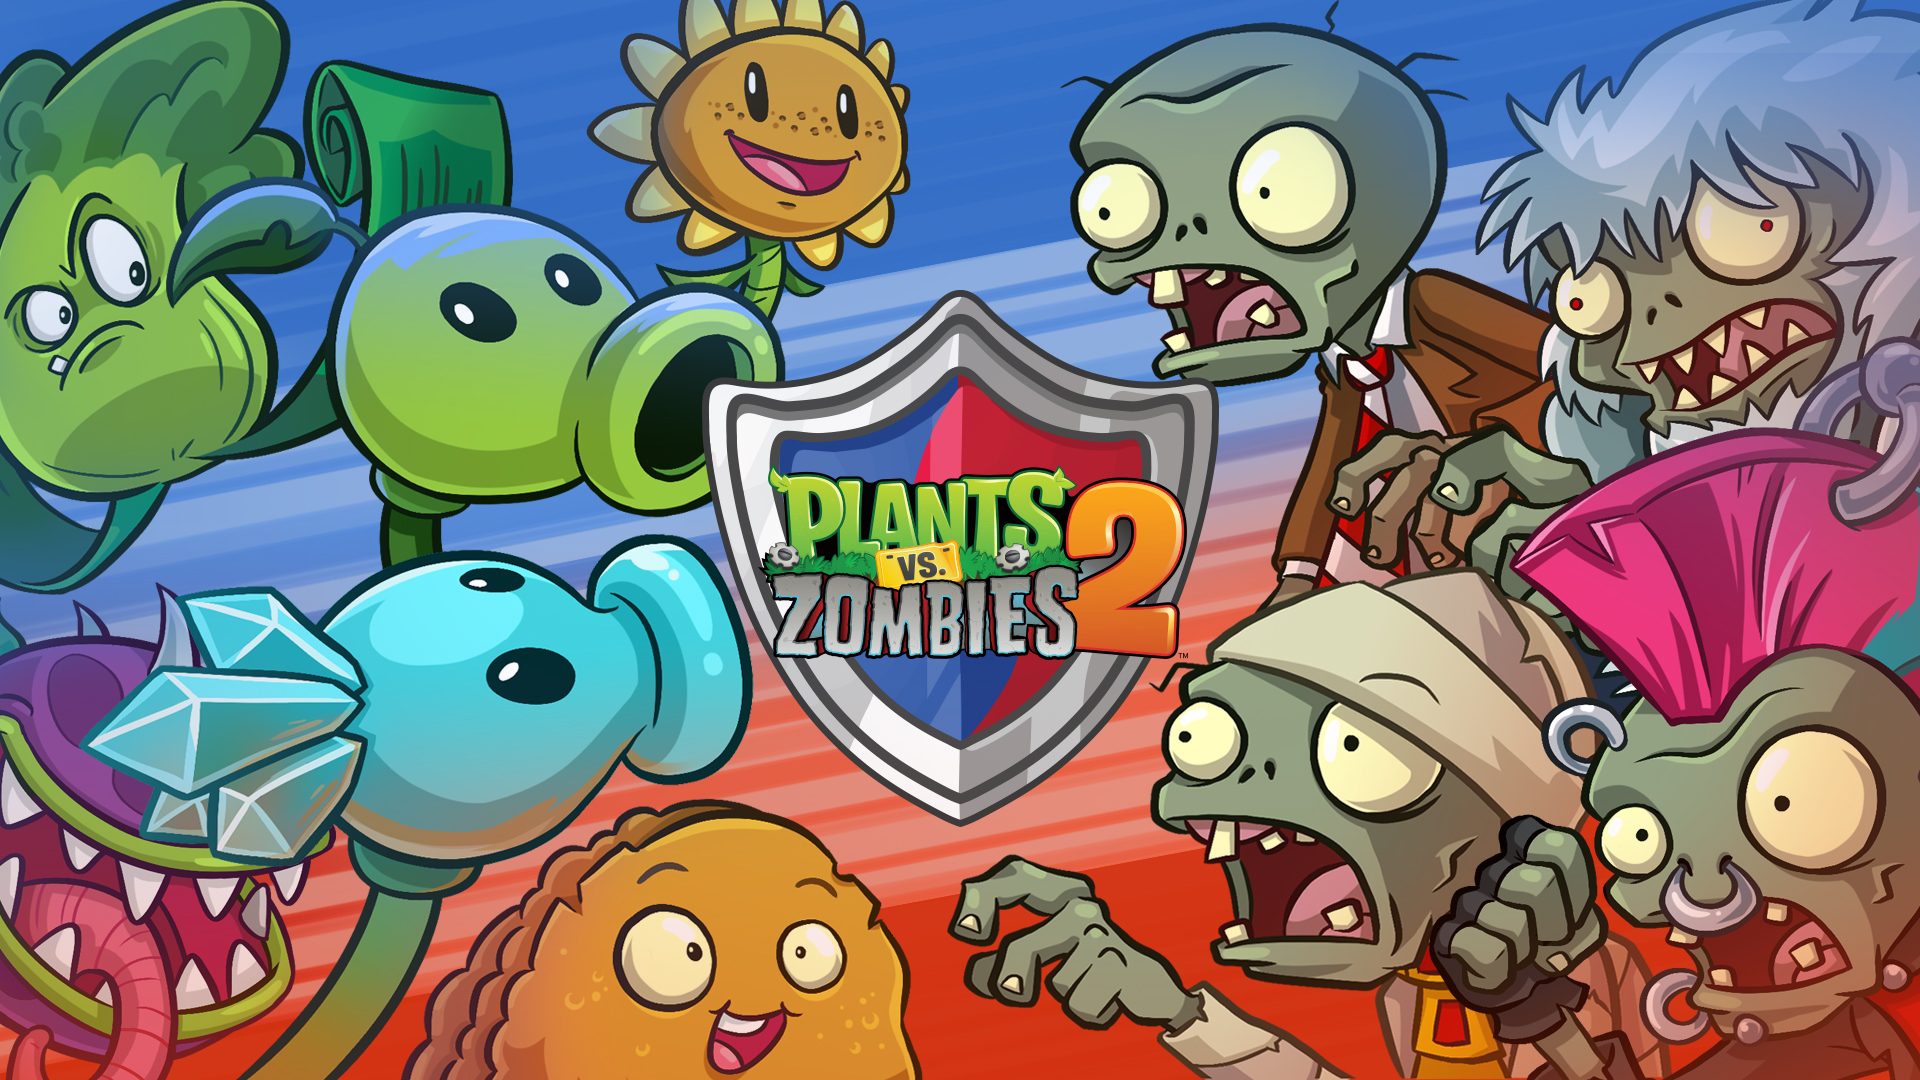 Zombies versus zombies versus plantas